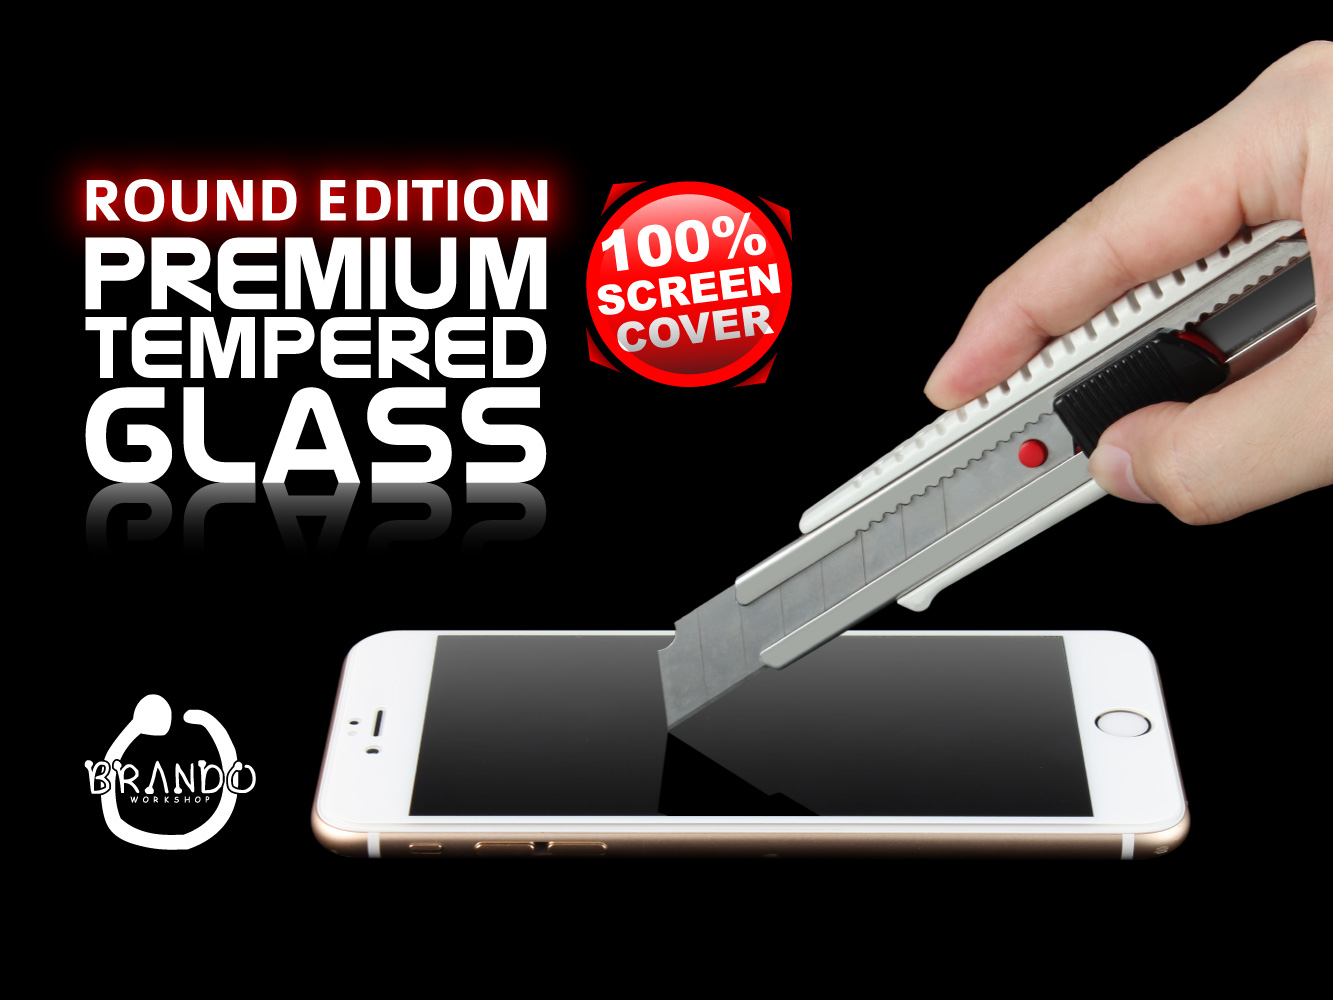 Brando Workshop Full Screen Coverage Glass Protector (Samsung Galaxy S6) - Gold